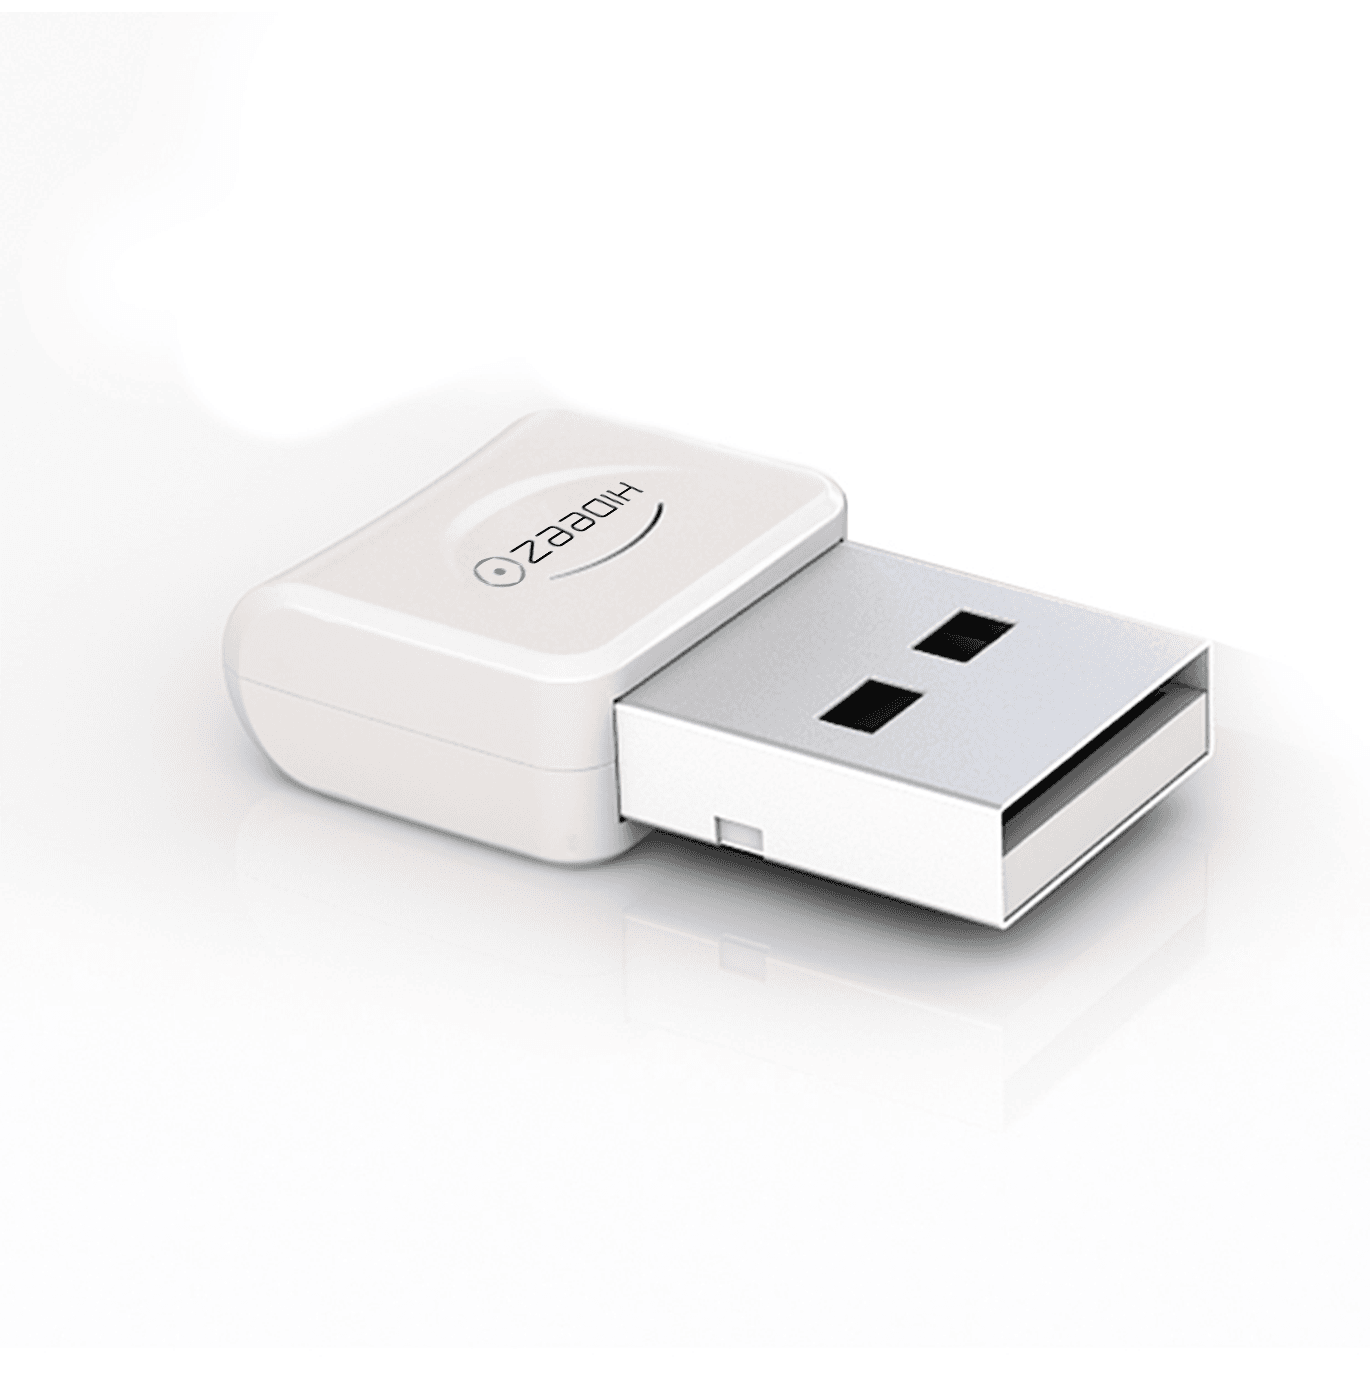 Forhandle fotoelektrisk fedme Hideez USB Bluetooth Adapter for Windows, macOS, Linux, Raspberry Pi